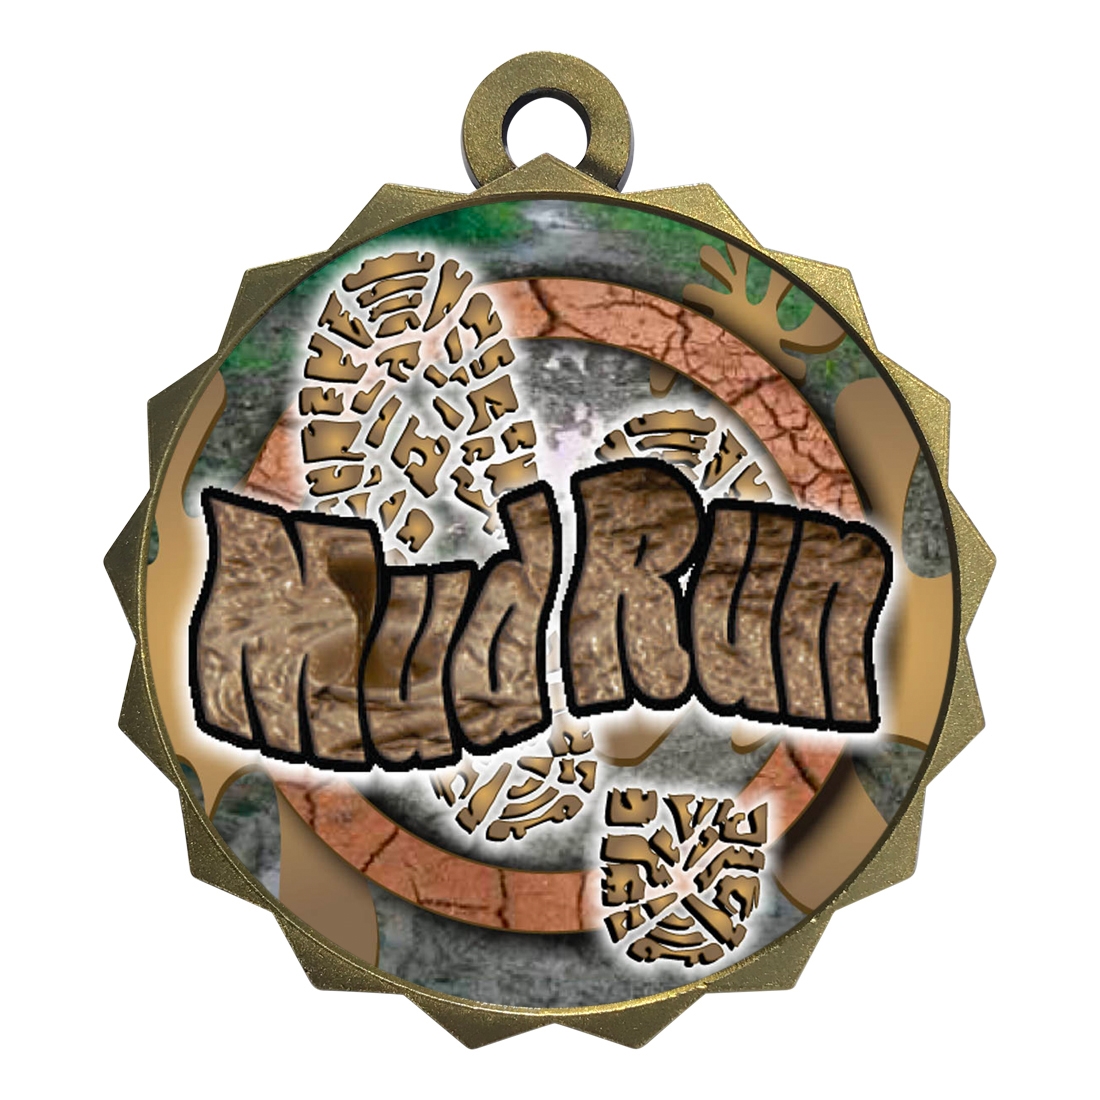 2-1/4" Mud Run Medal